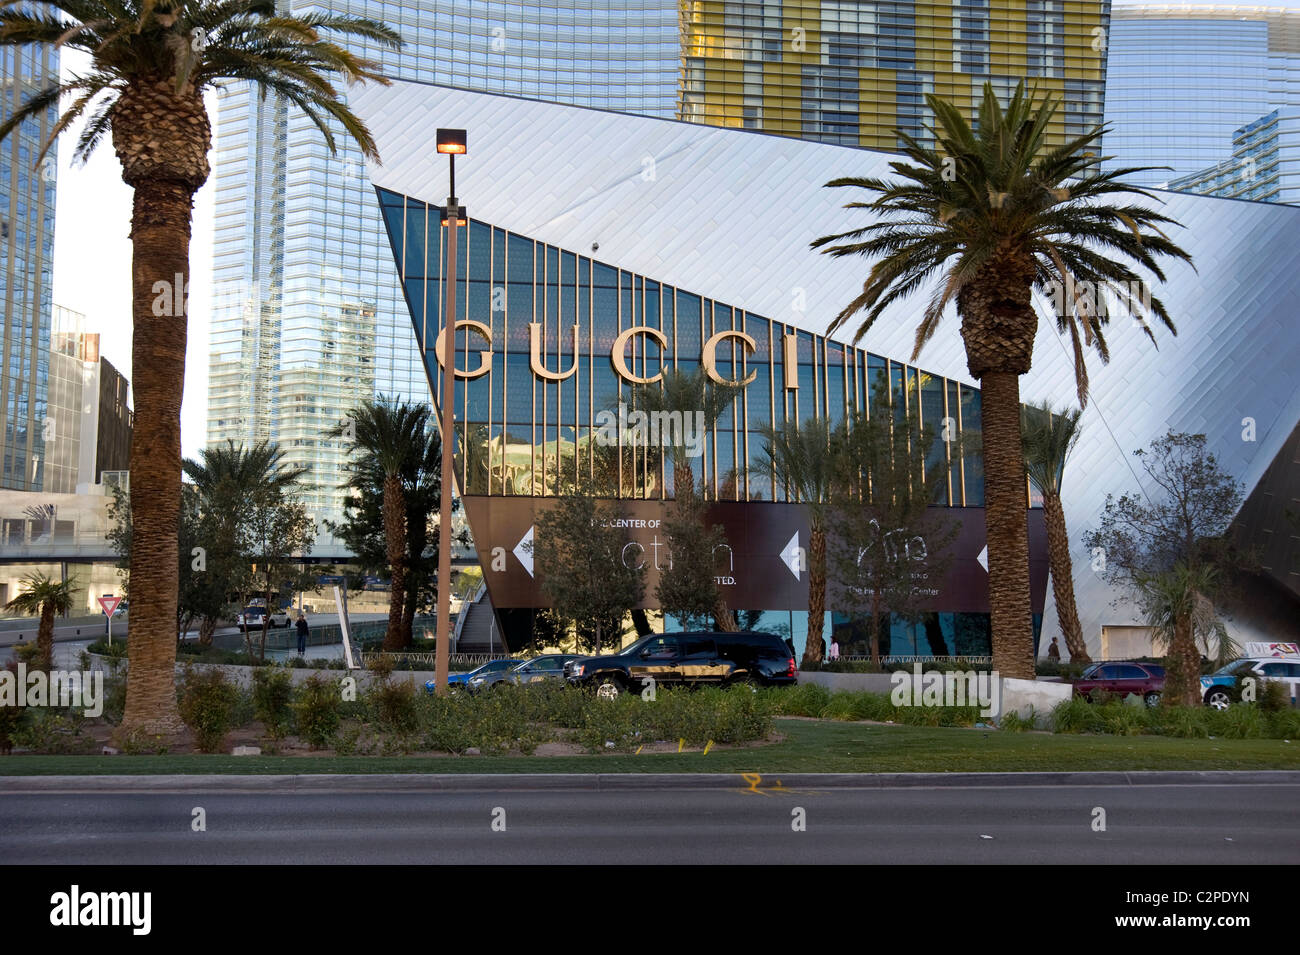 Gucci Las Vegas Nevada USA Stock Photo - Alamy